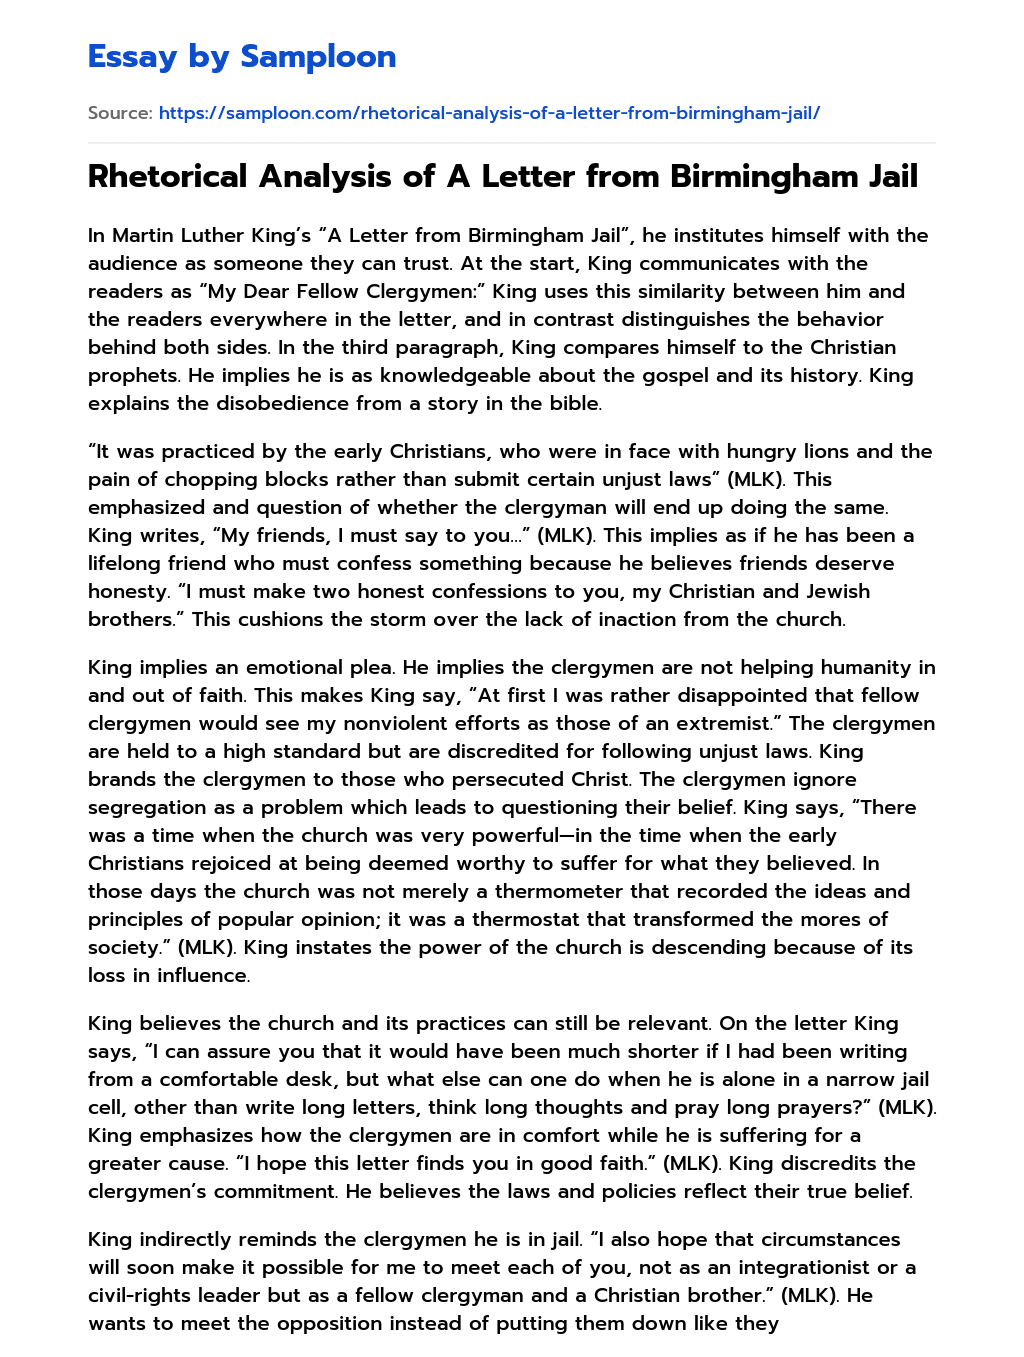 Rhetorical Analysis of A Letter from Birmingham Jail essay